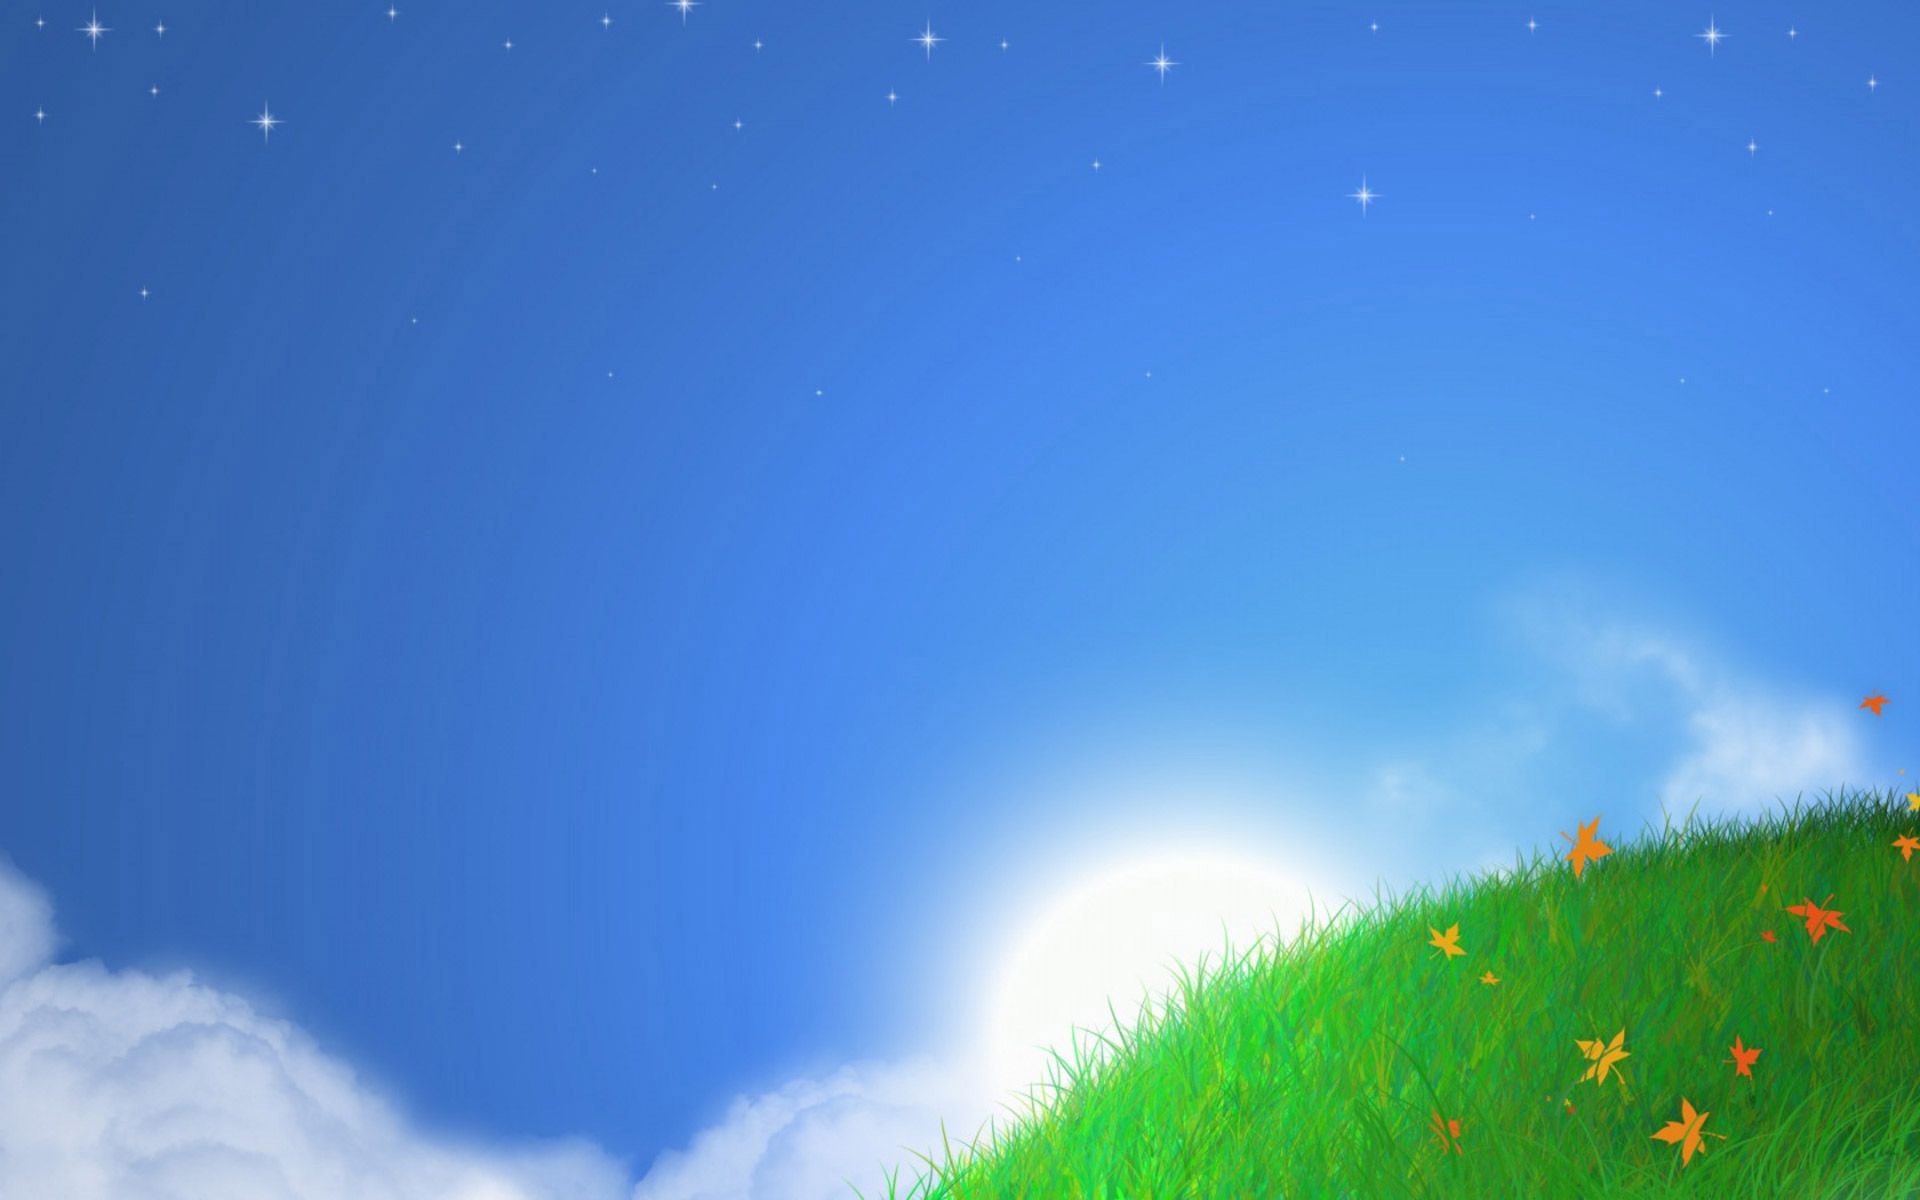 Windows 7 Theme summer meadow | Free Background